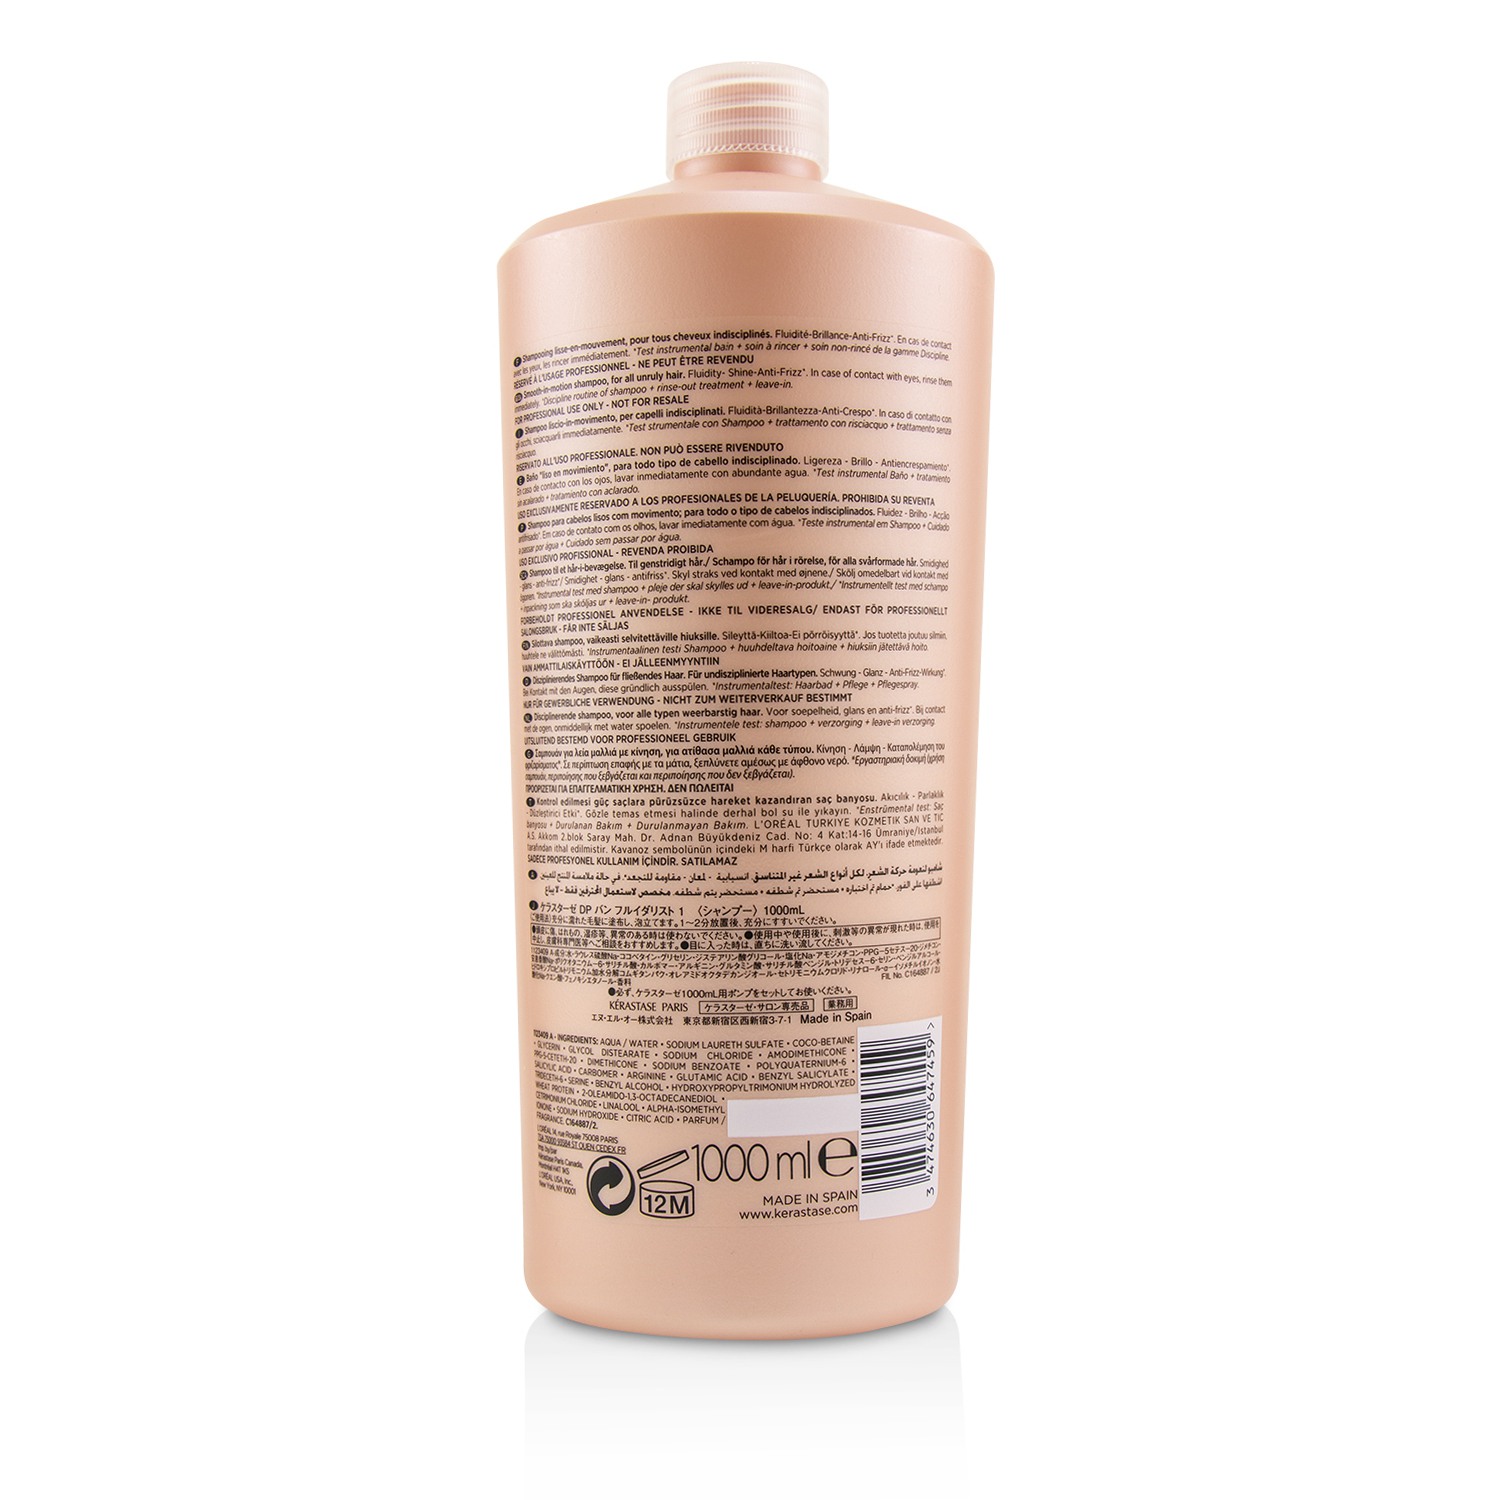 Kerastase Discipline Bain Fluidealiste Smooth-in-Motion Shampoo - 34 oz bottle